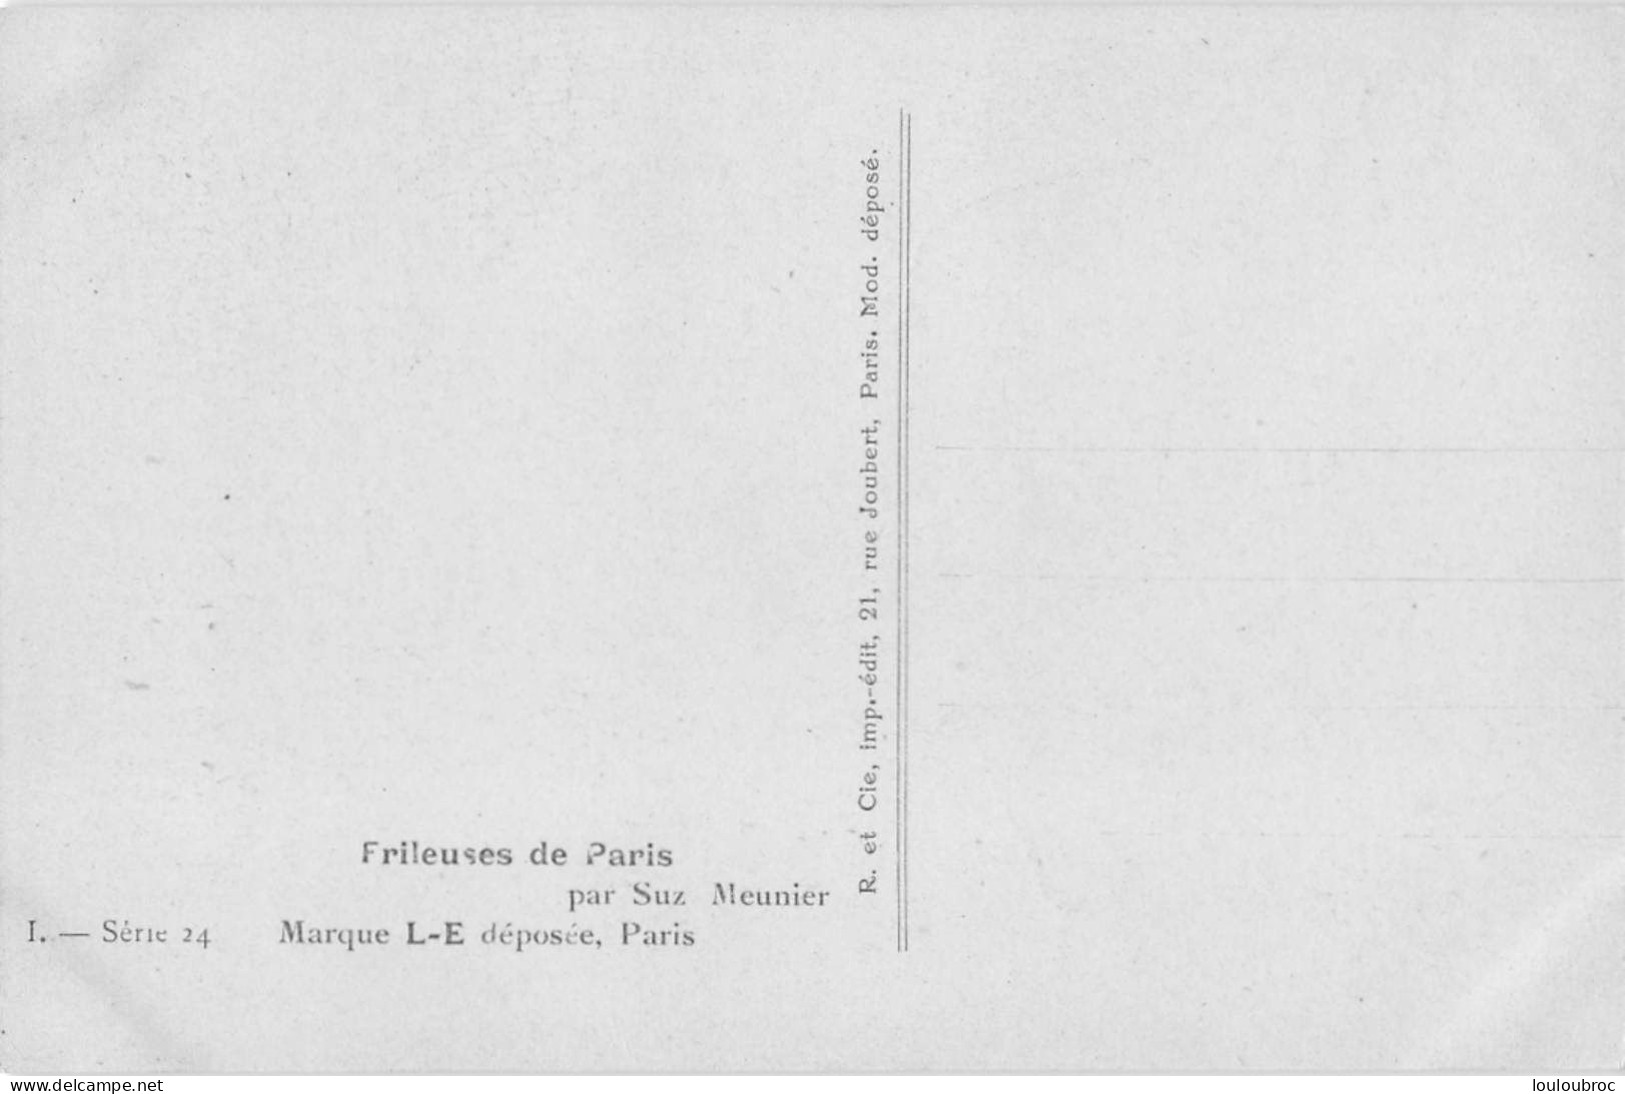 SUZANNE MEUNIER FRILEUSES DE PARIS SERIE 24 N°1 - Meunier, S.